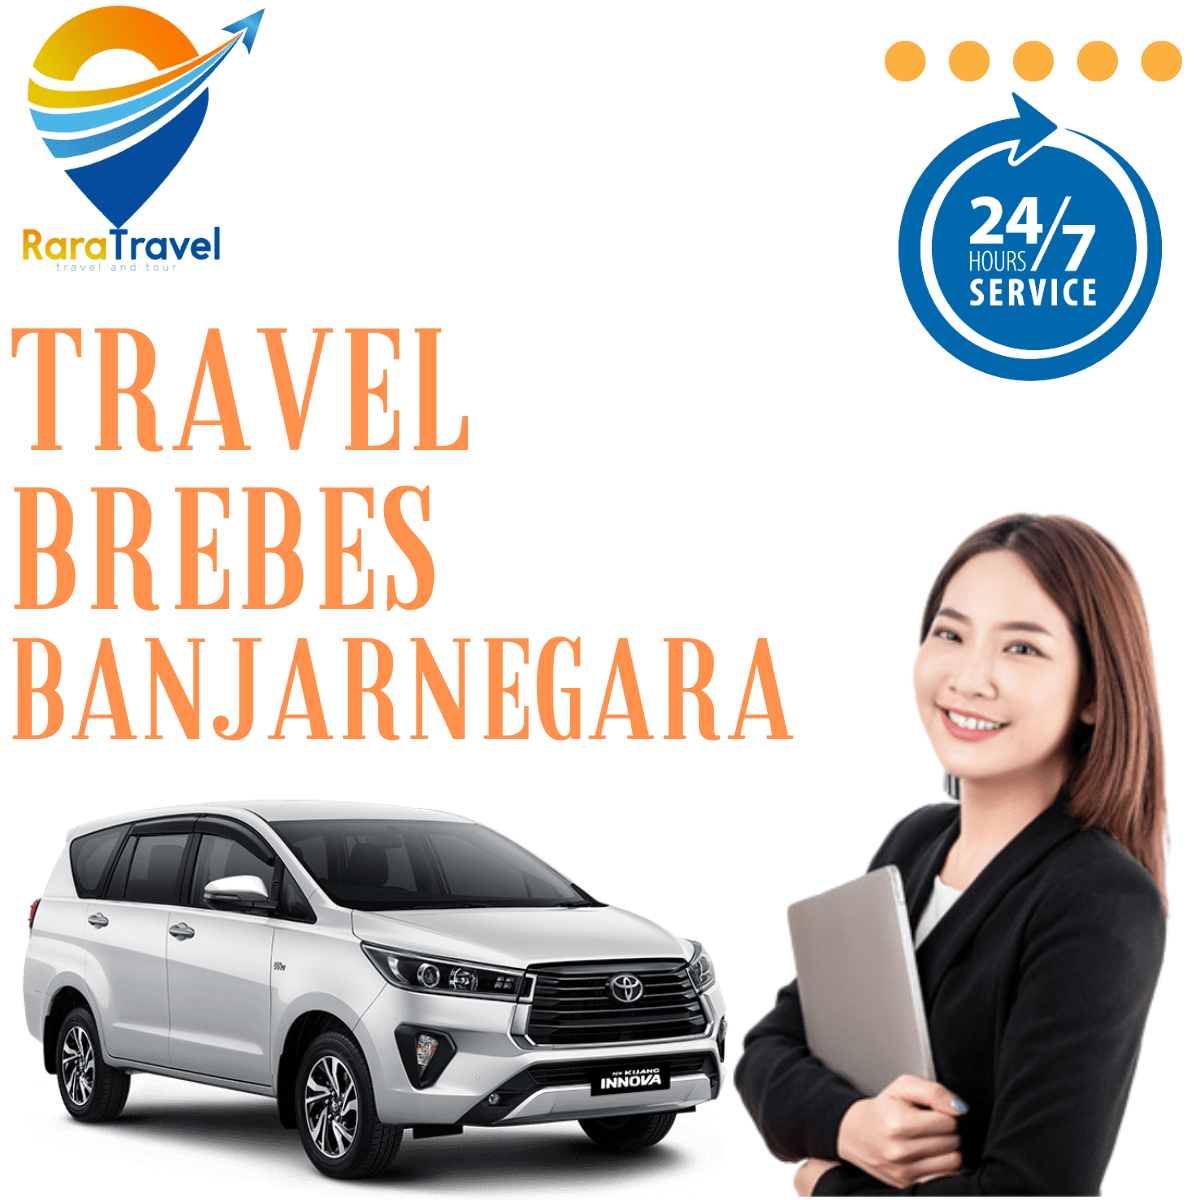 Travel Brebes Banjarnegara Murah - RaraTravel.id